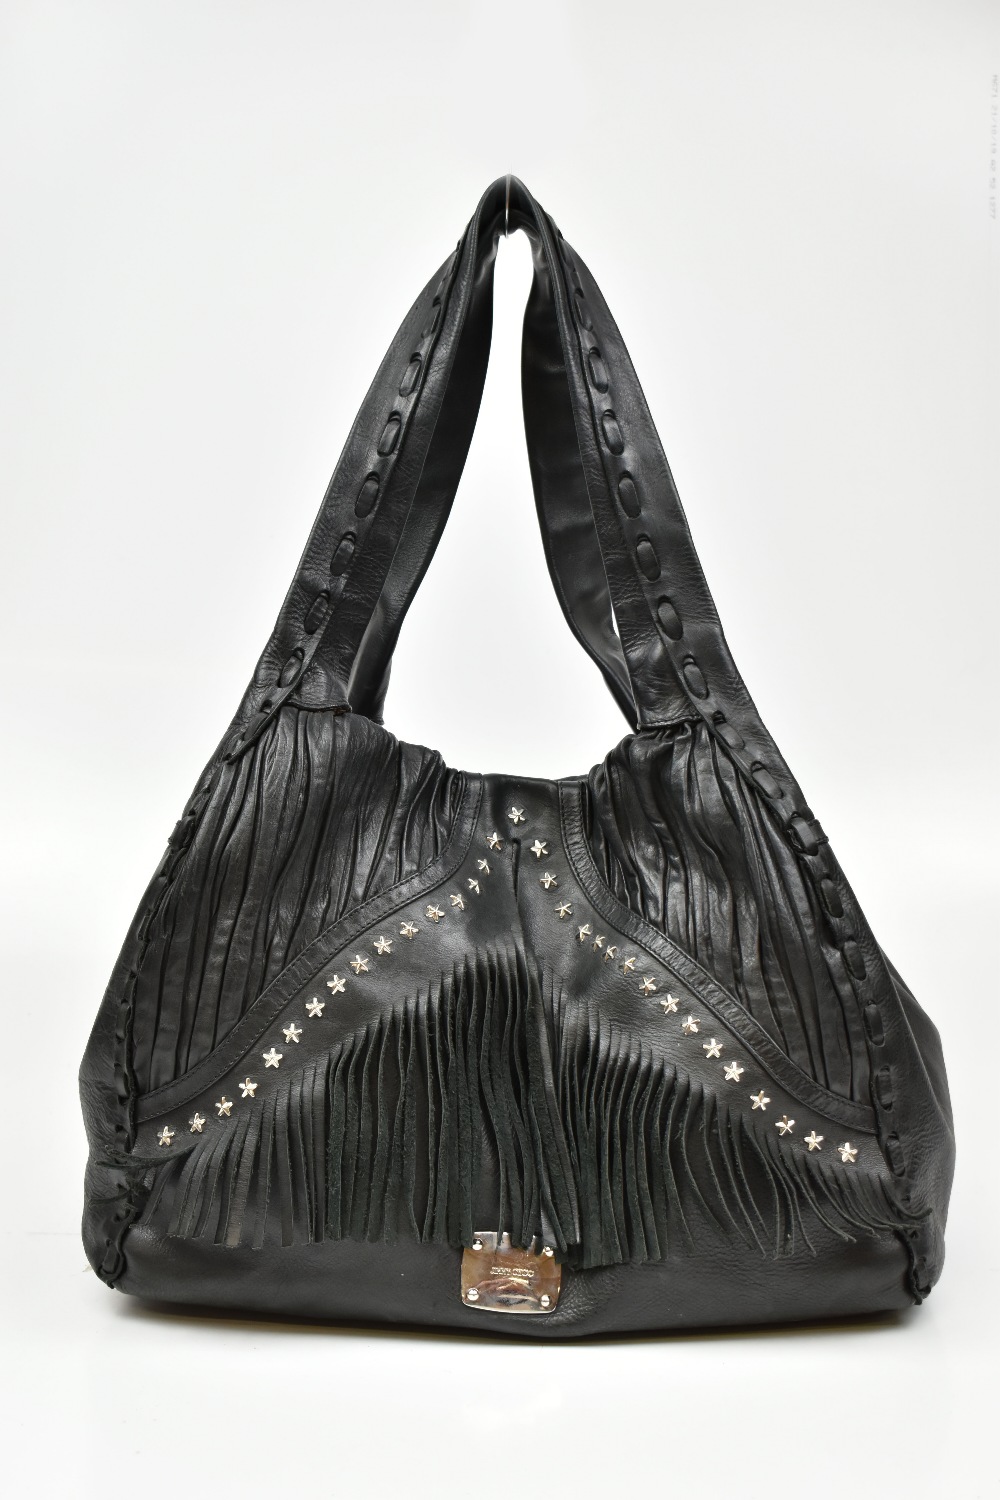 JIMMY CHOO IMAN; a black Napa leather star studded fringe shoulder bag with silver-tone hardware, 38